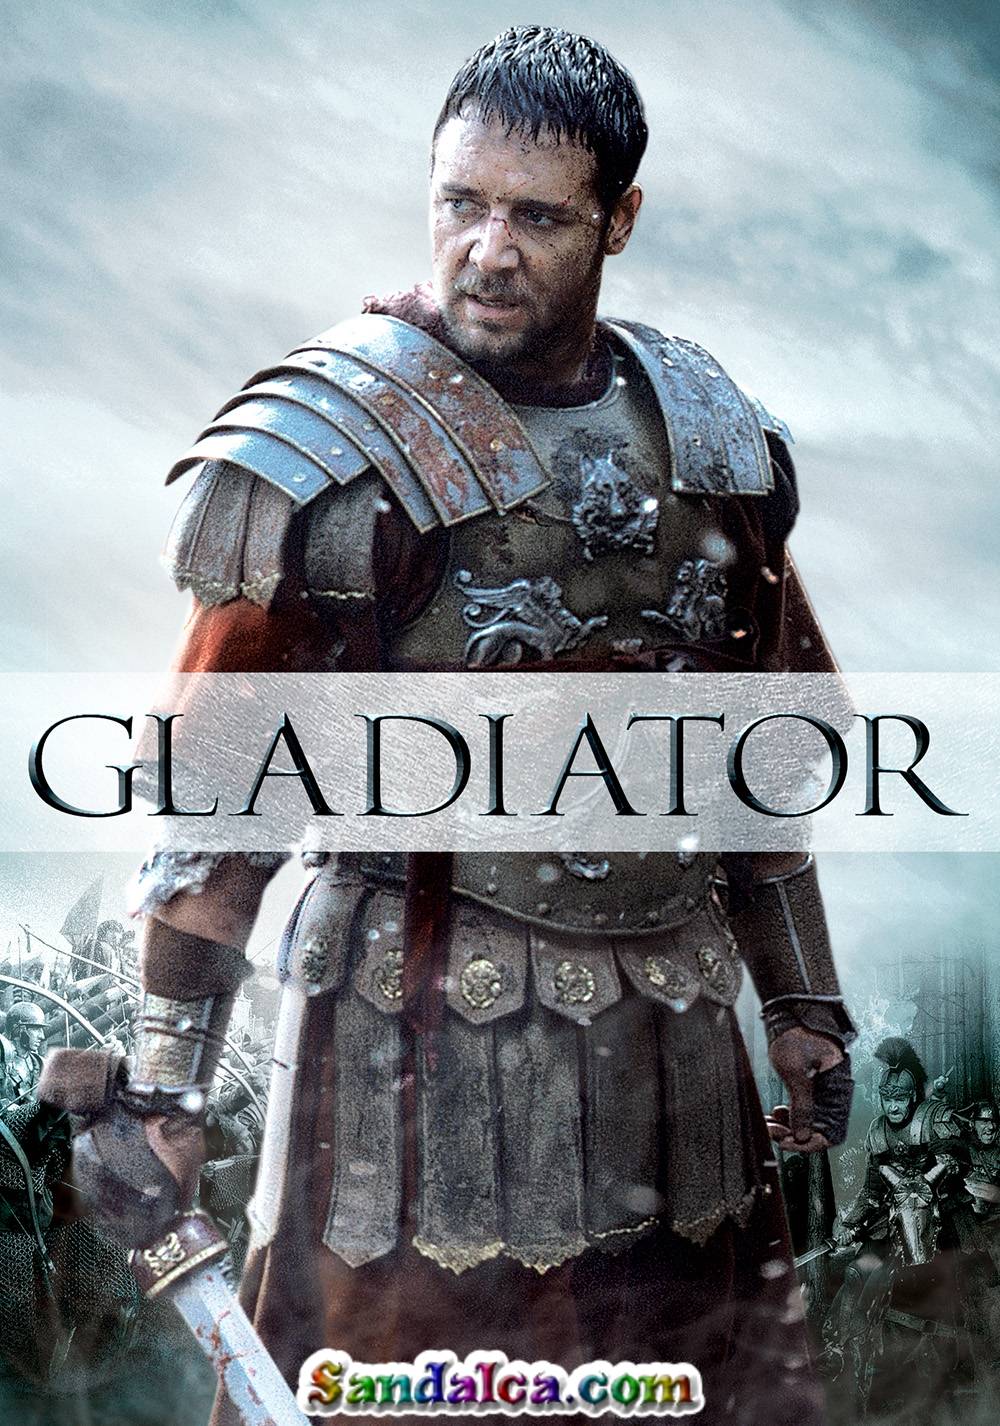 Gladyatör - Gladiator Türkçe Dublaj indir | Remastered Edition Extended Cut | XviD | 2000